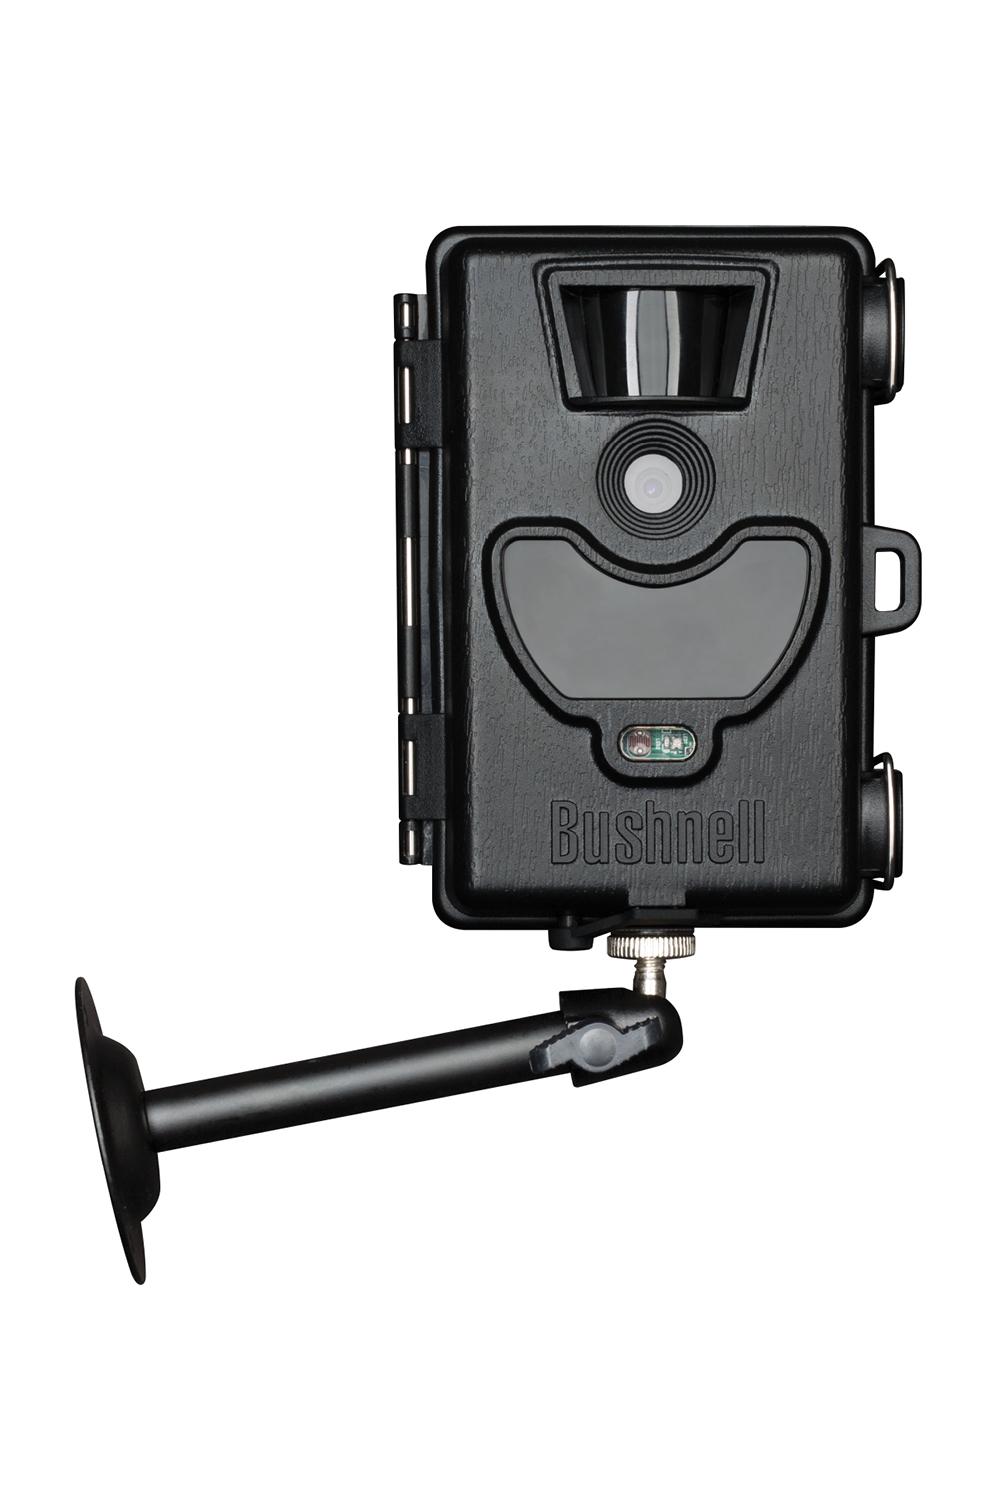   / Bushnell Surveillance Cam WI-FI   Ultra-mart